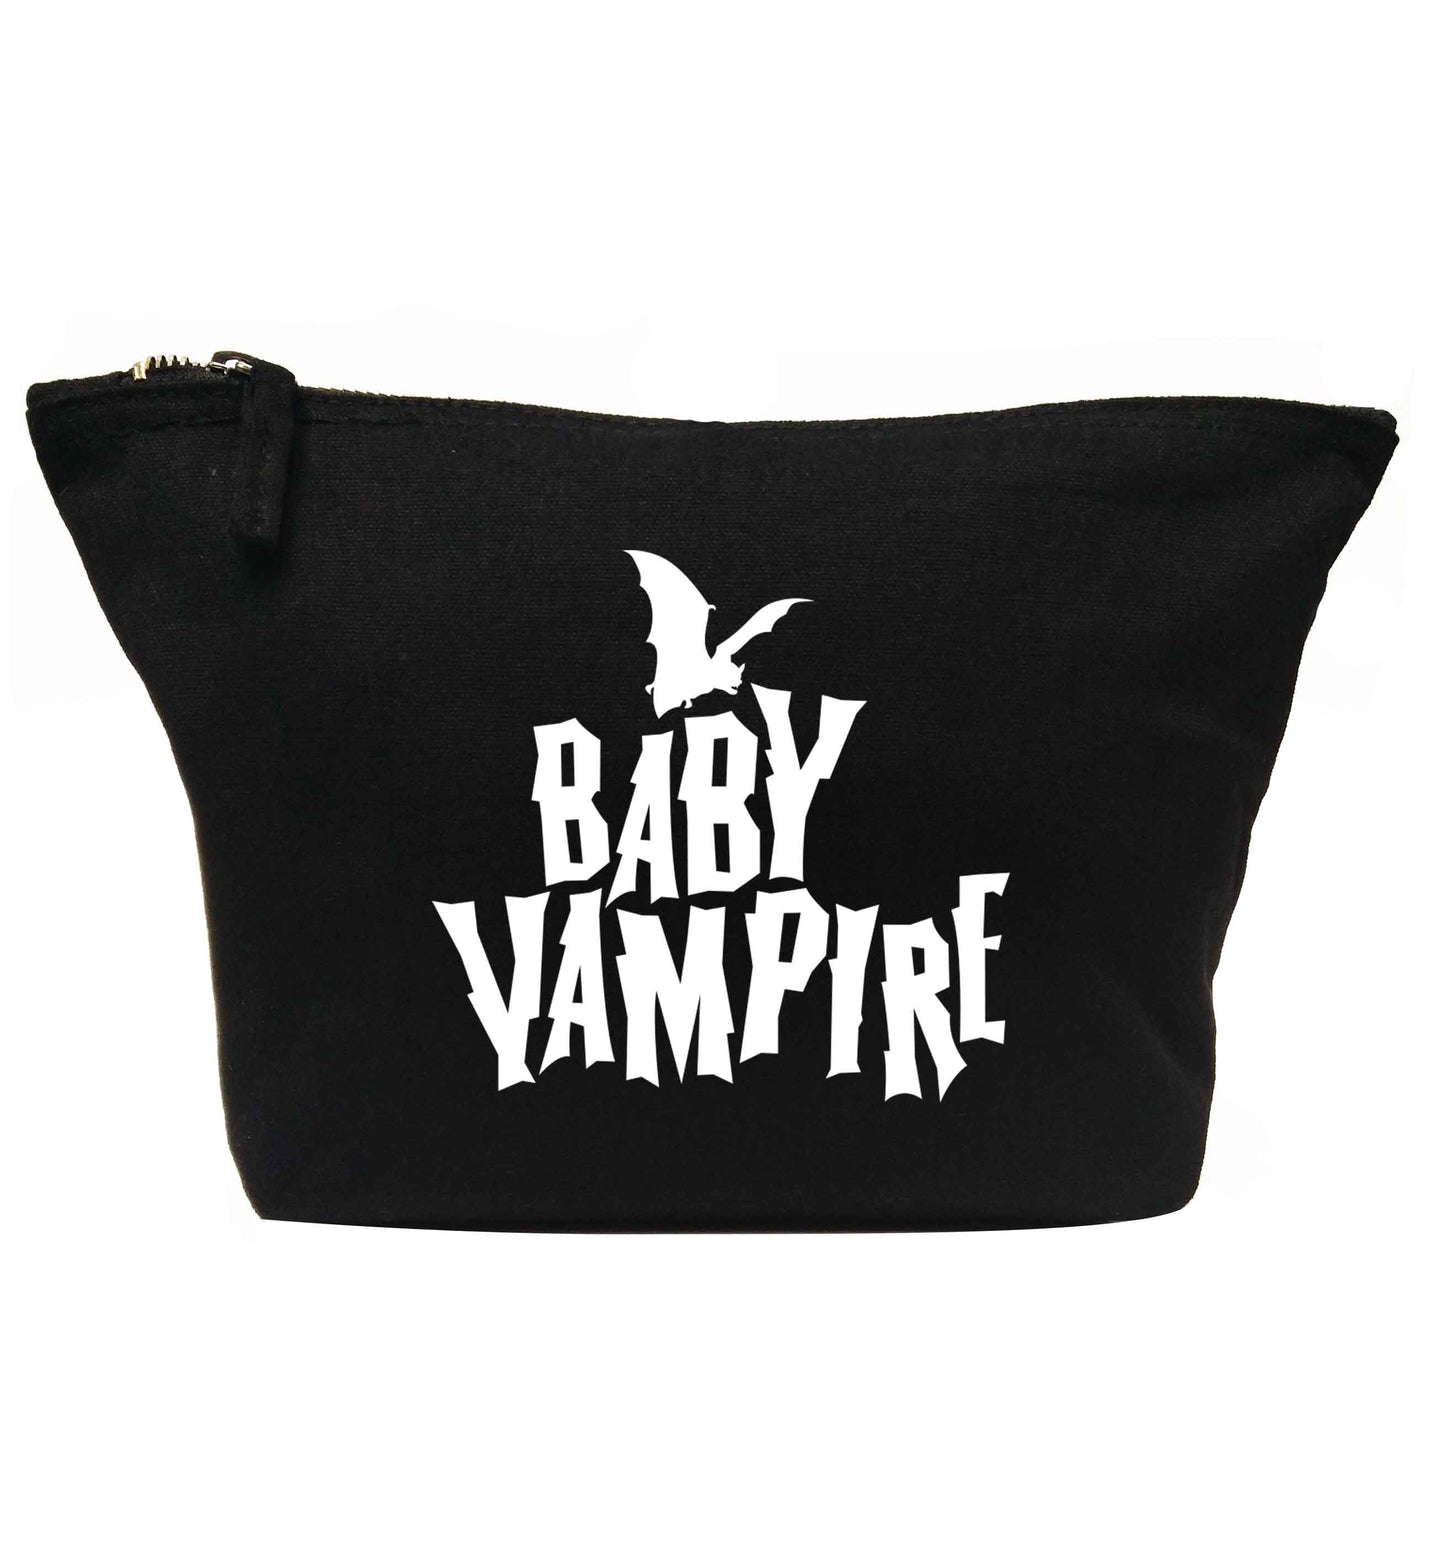 Baby vampire | Makeup / wash bag